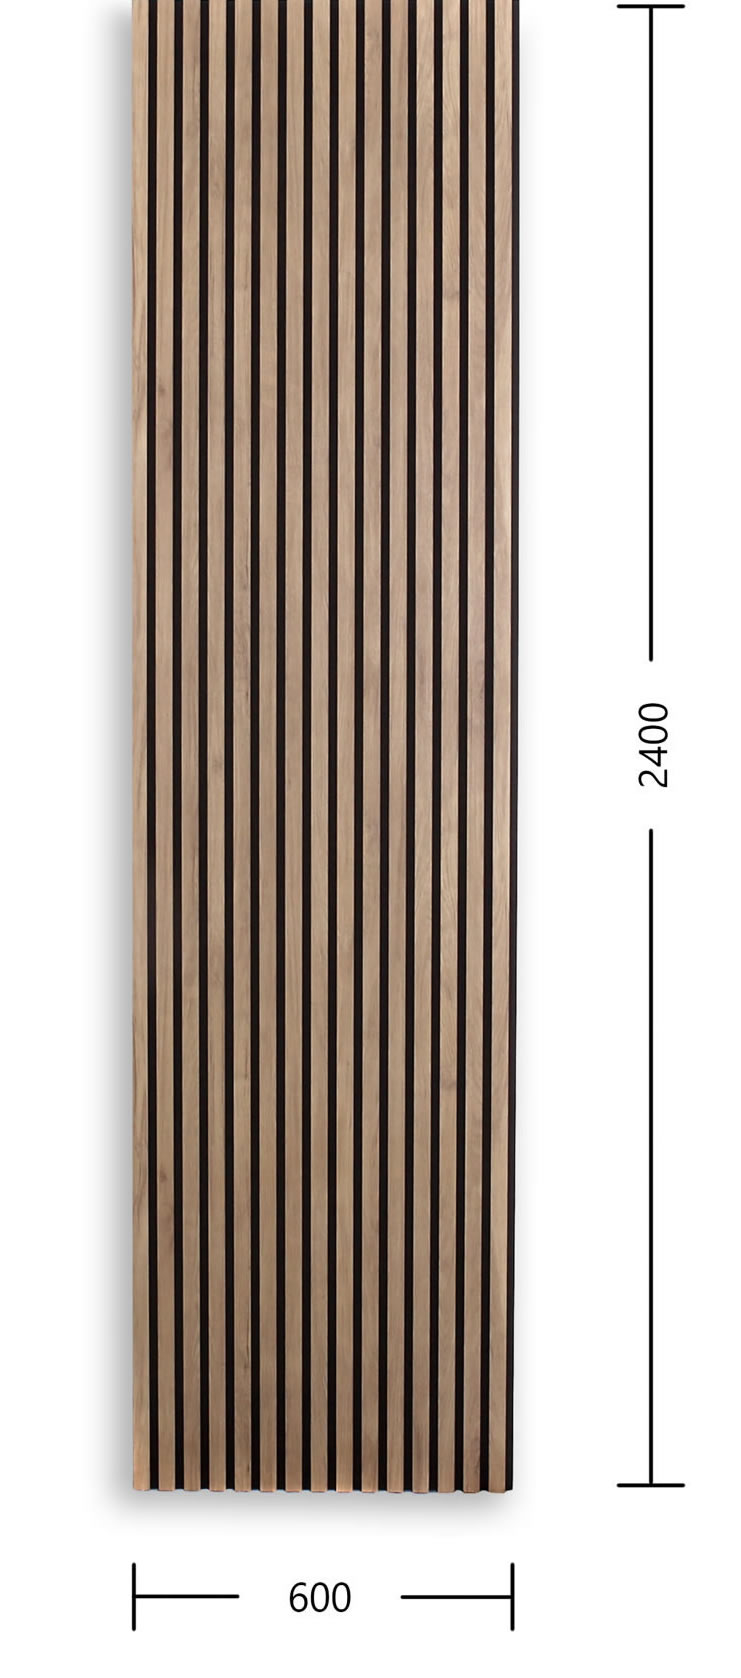 Decorative Slatwall example size